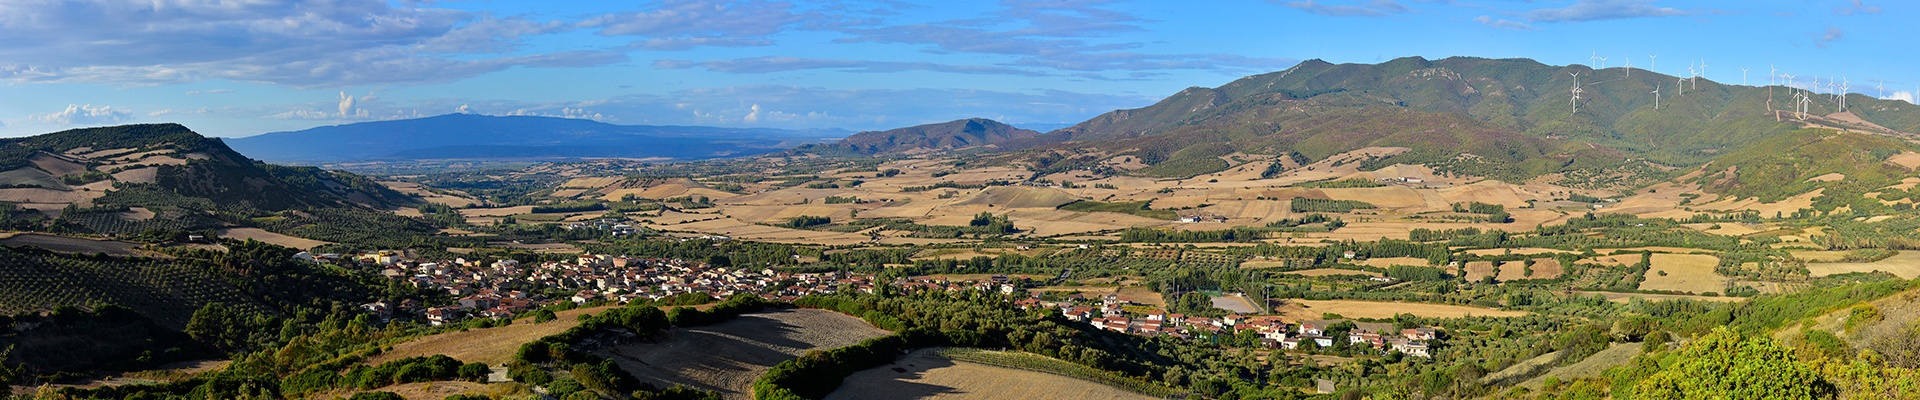 Villaurbana. Panoramica del territorio